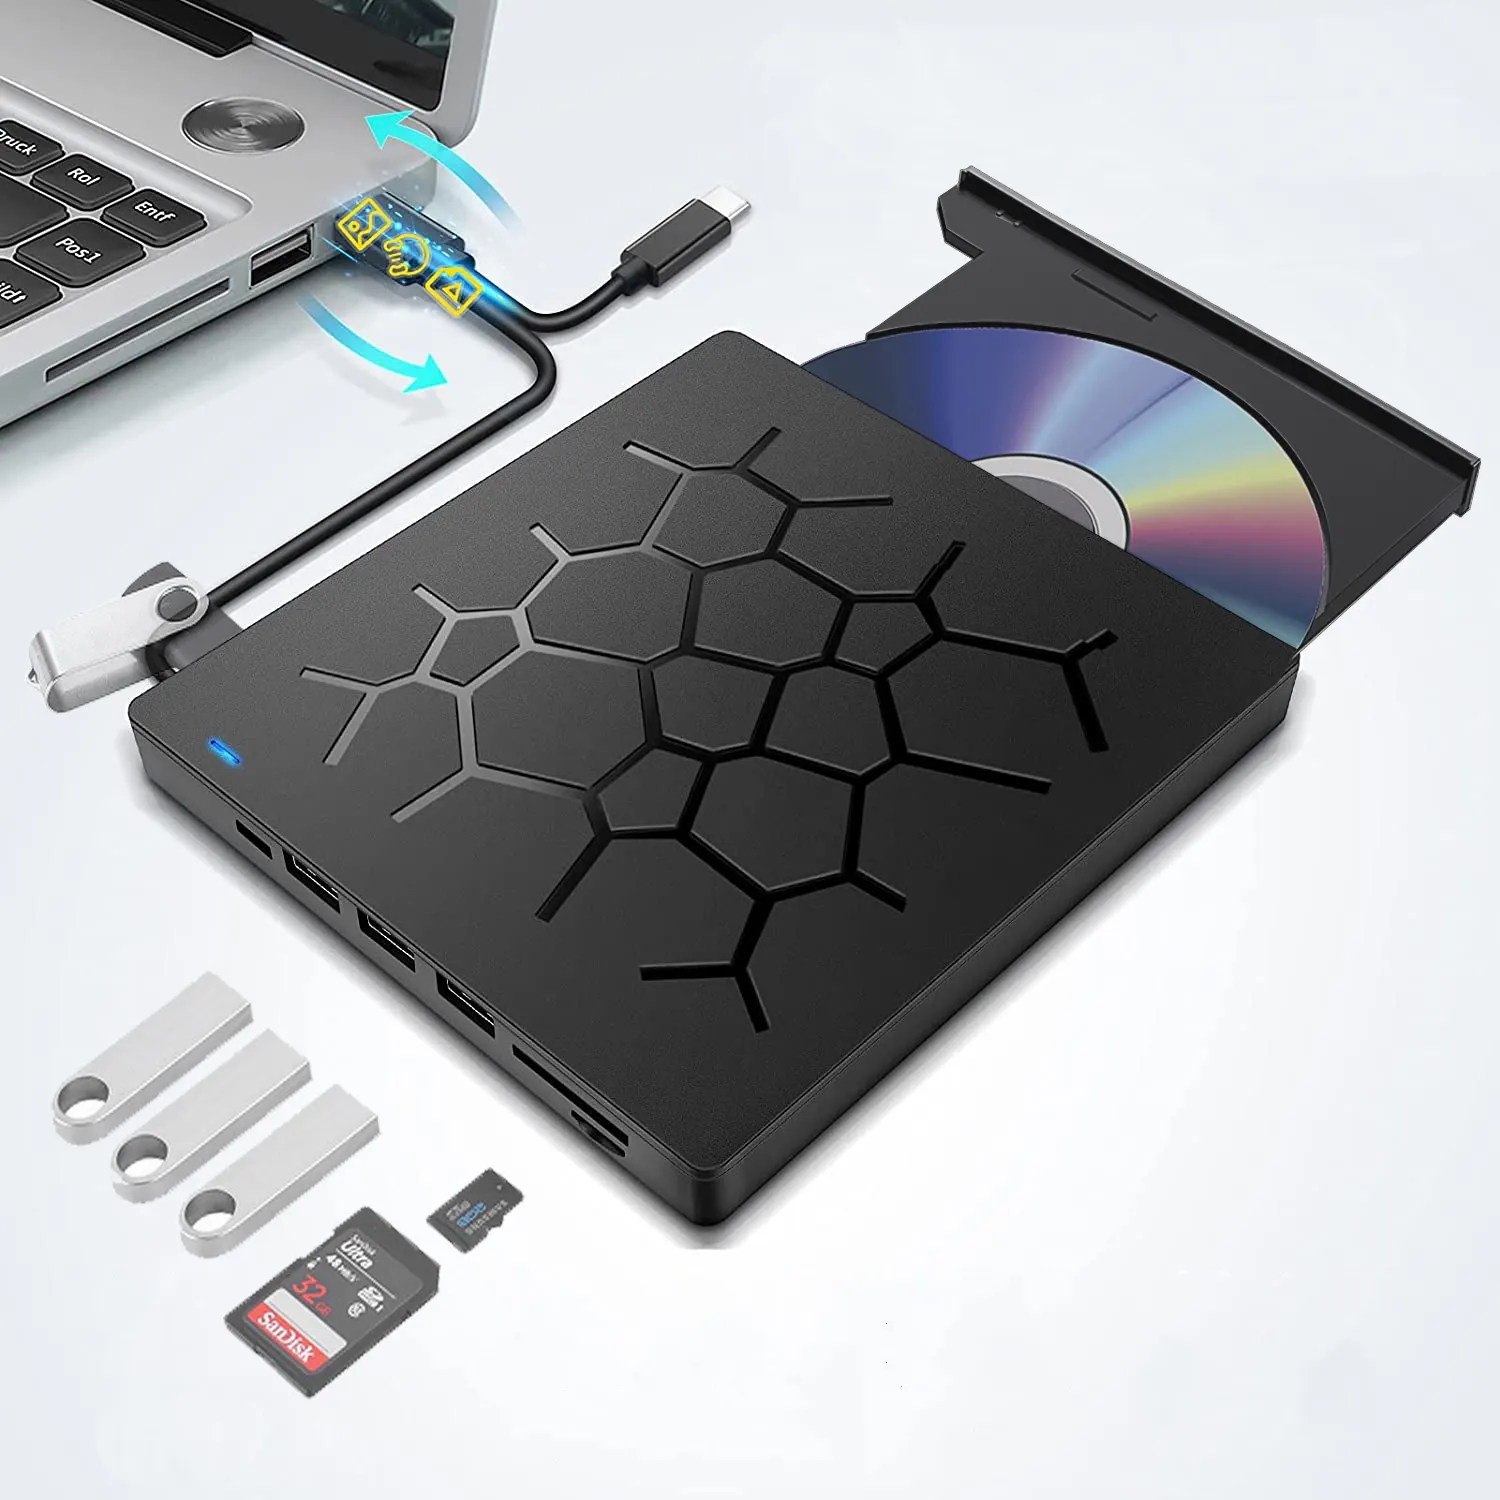 Voor Laptop/Desktop/Macbook Draagbare Slanke Multifunctionele 7 In 1 Externe Dvd-Drive Usb 3.0 Cd Drive Dvd Rw